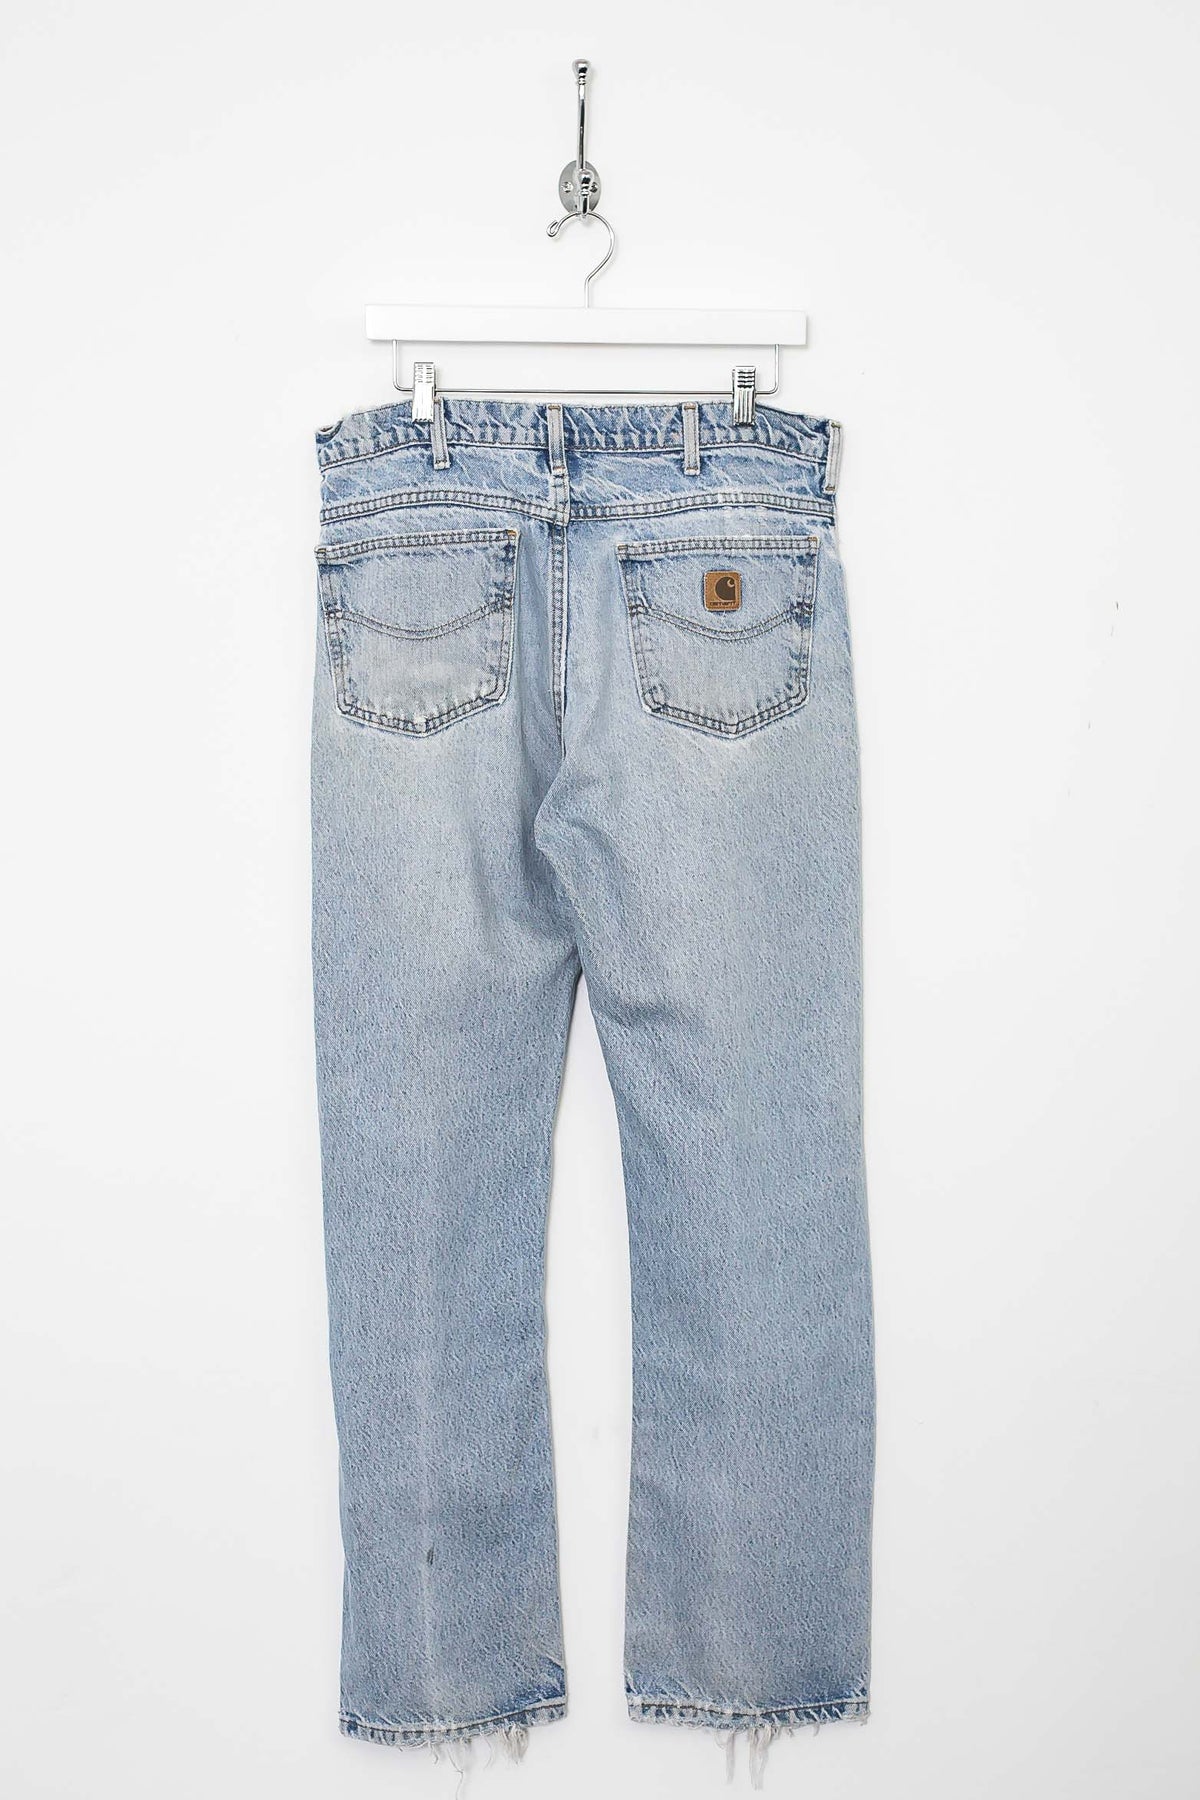 00s Carhartt Jeans (M)